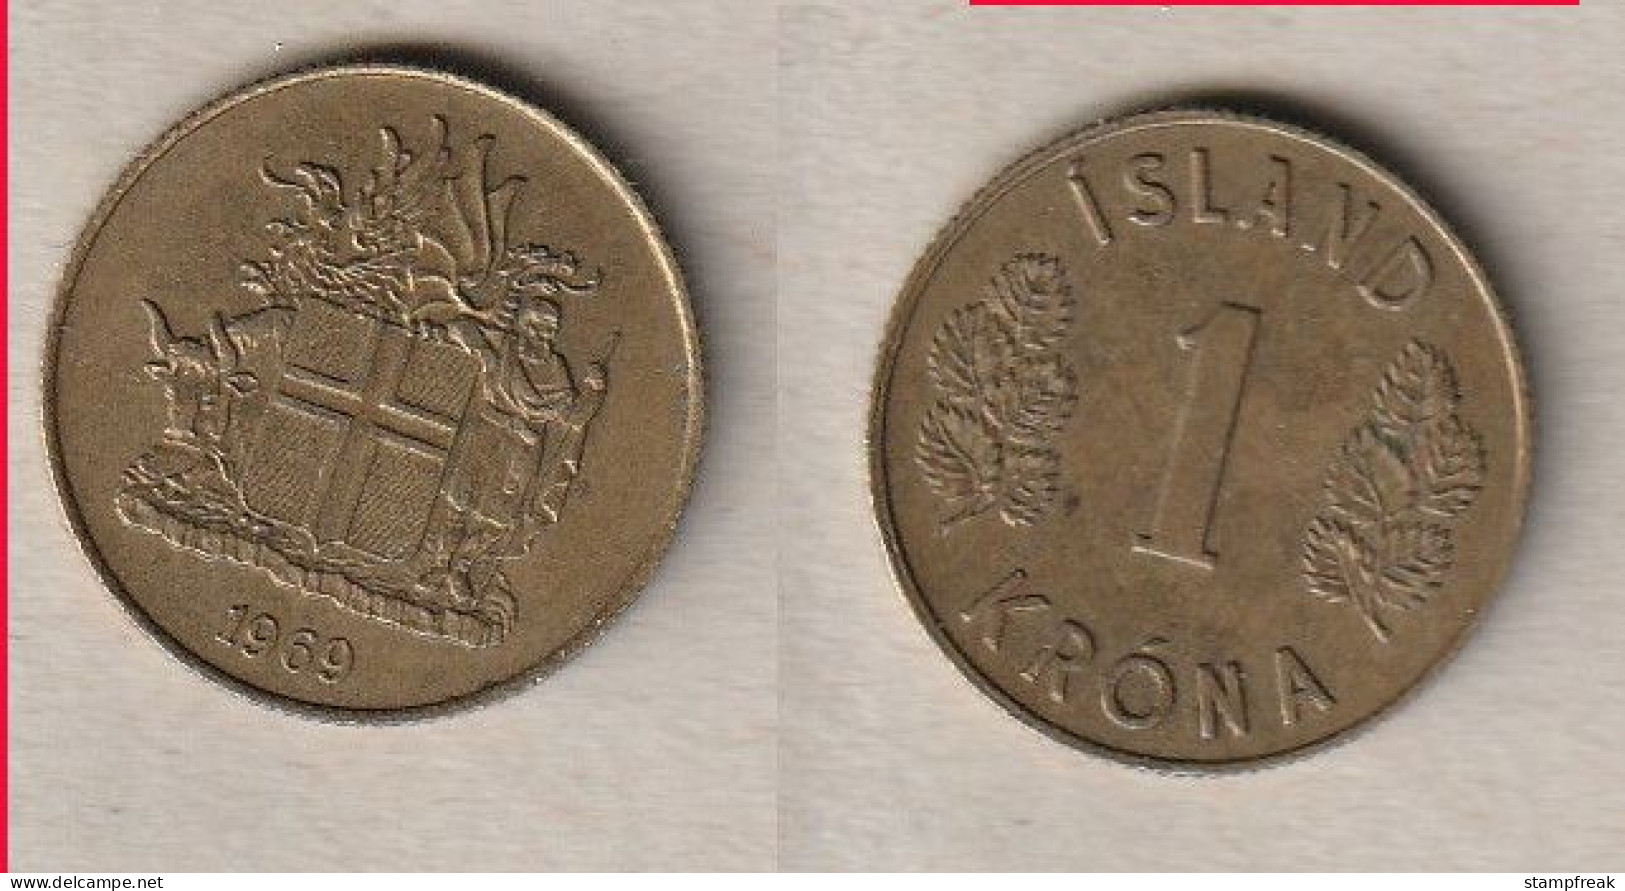 00147) Island, 1 Krone 1969 - IJsland